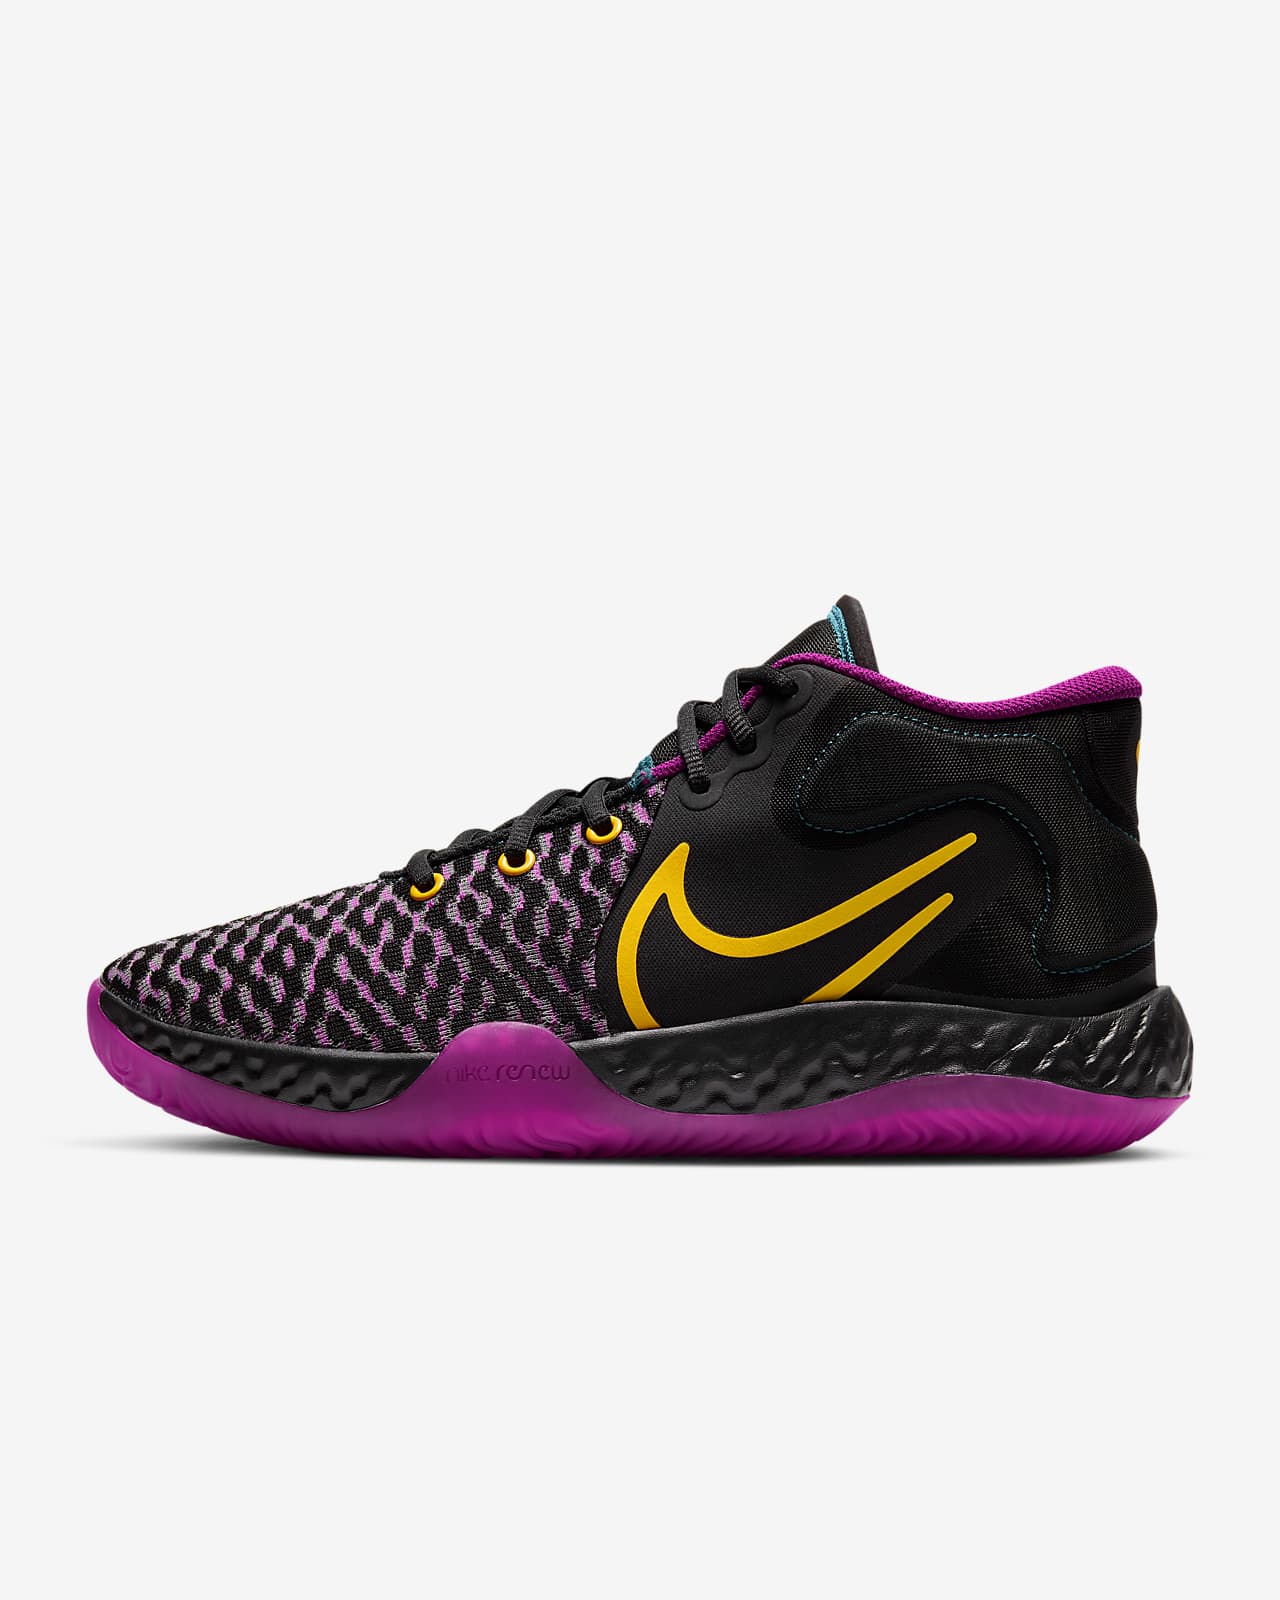 KD Trey 5 VIII EP Basketball Shoe. Nike MY